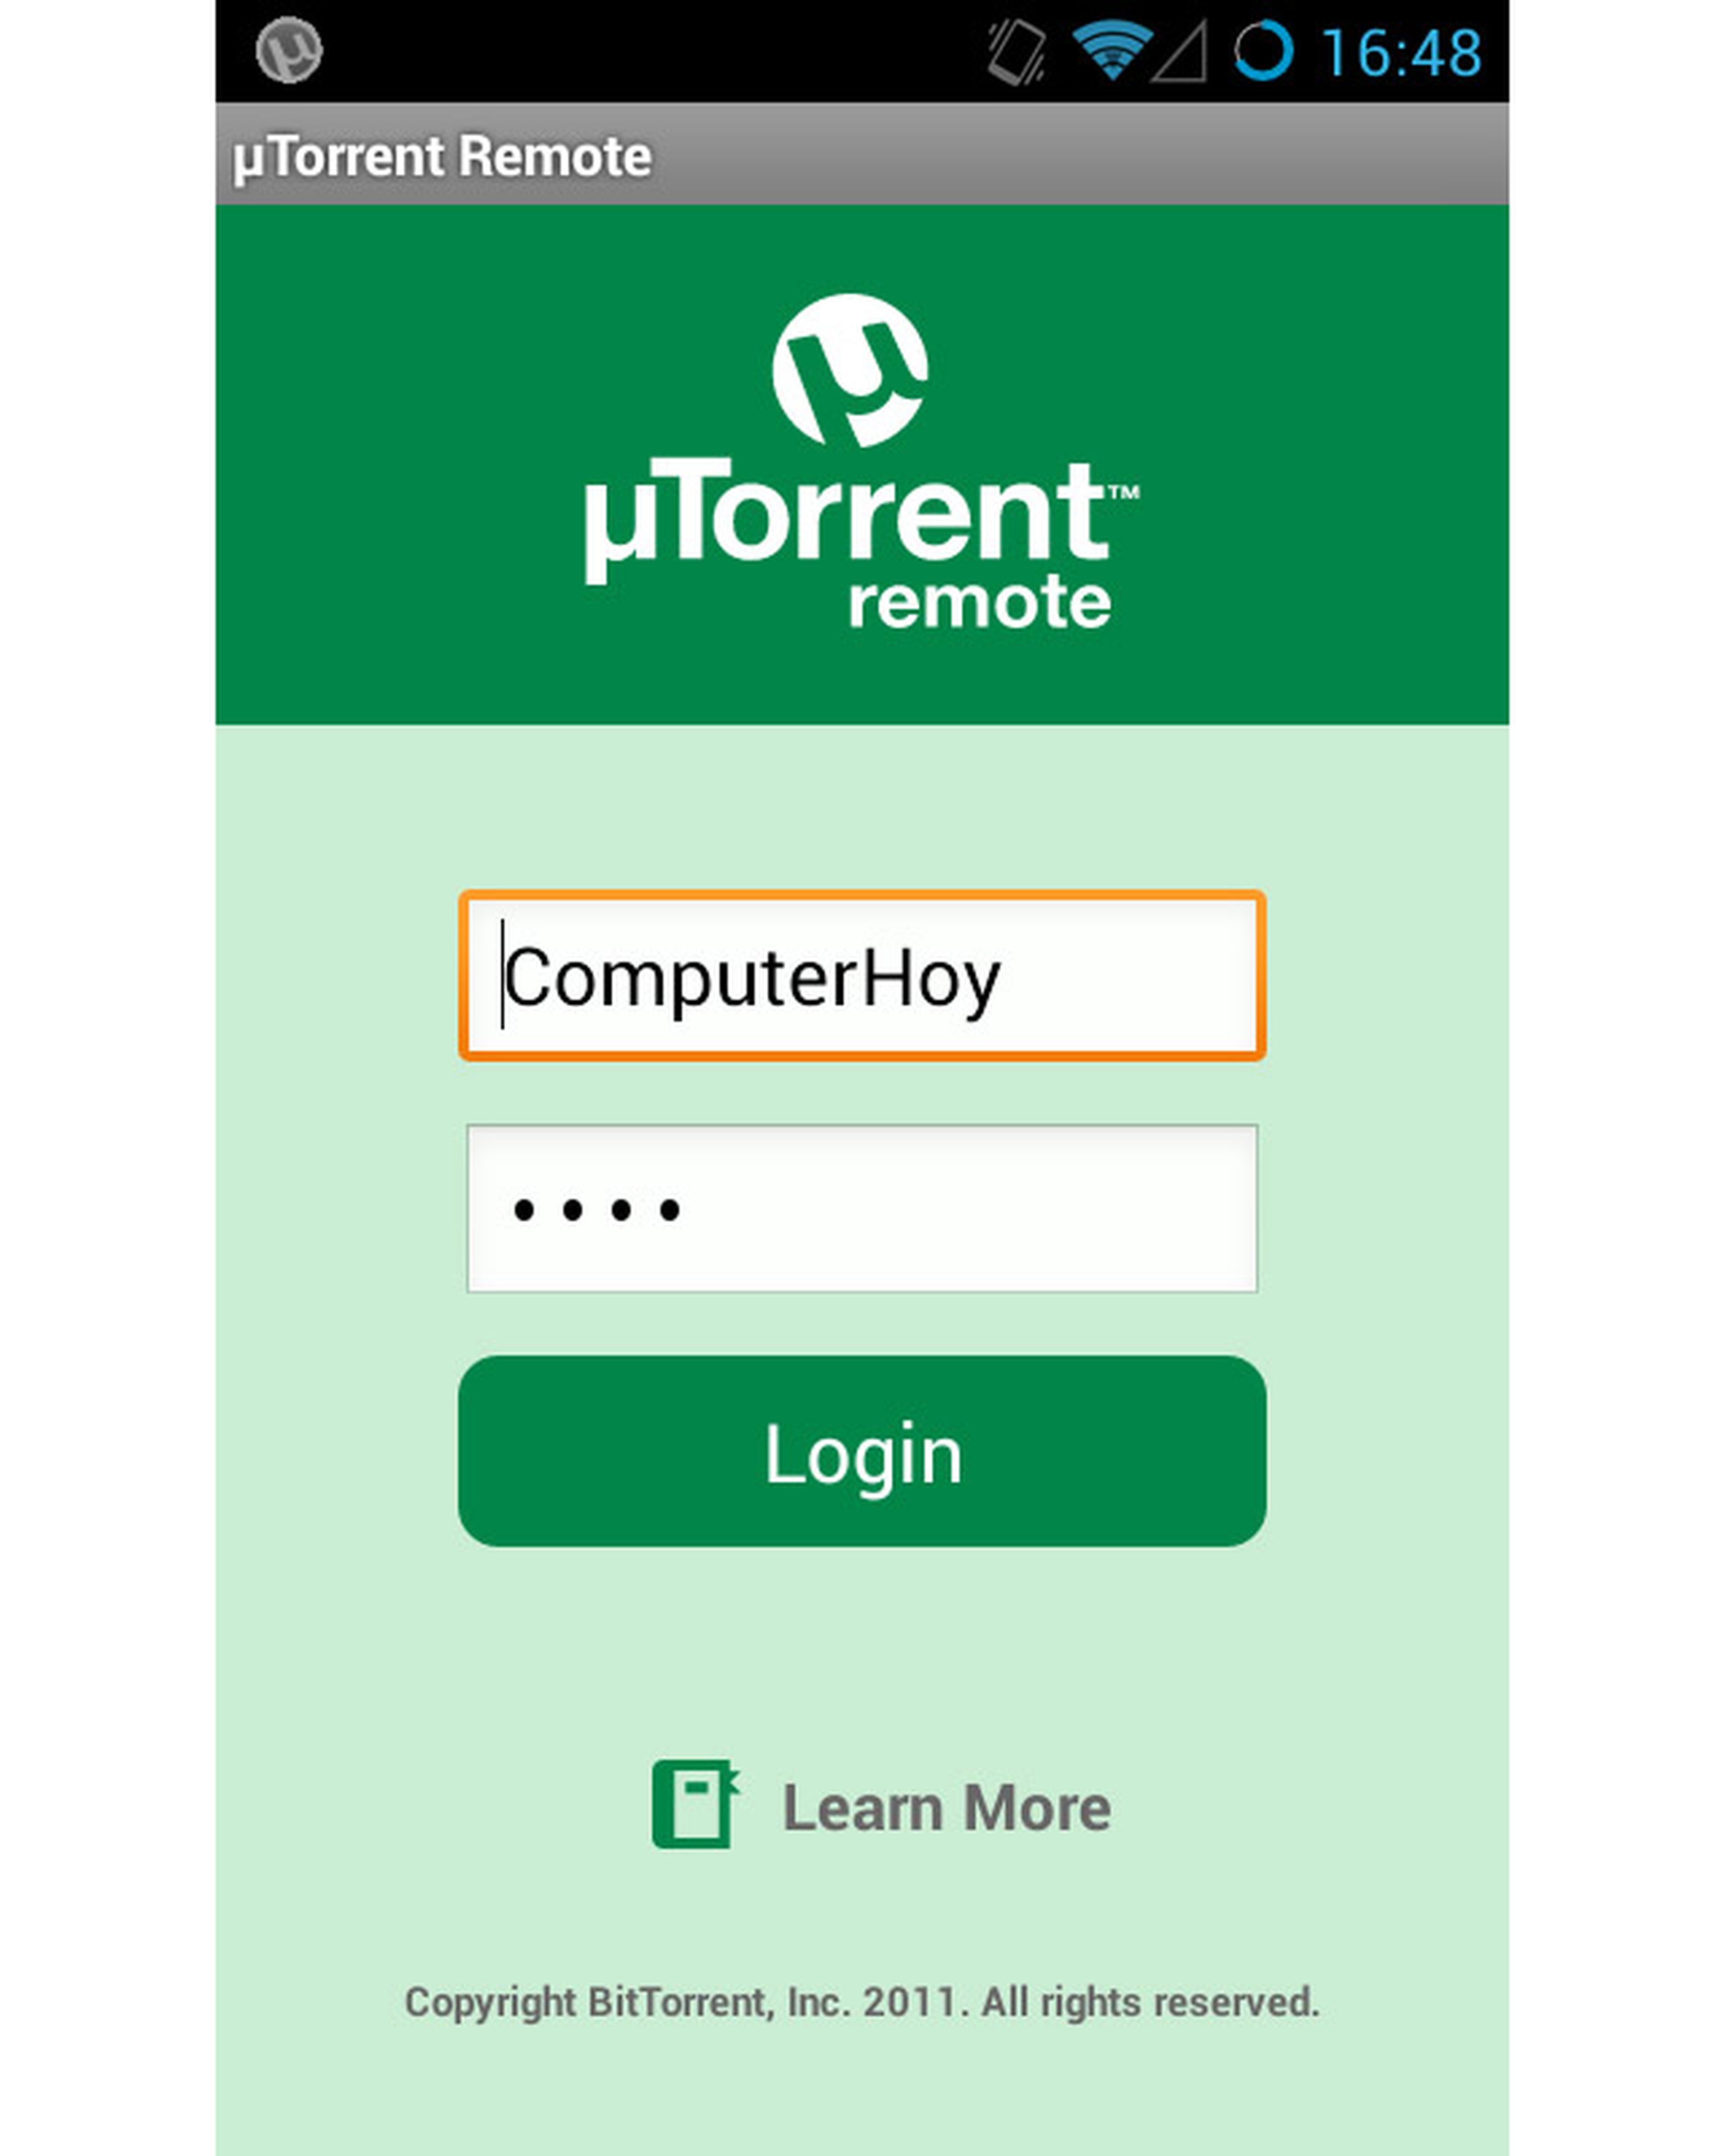 Instala uTorrent Remote en tu Android